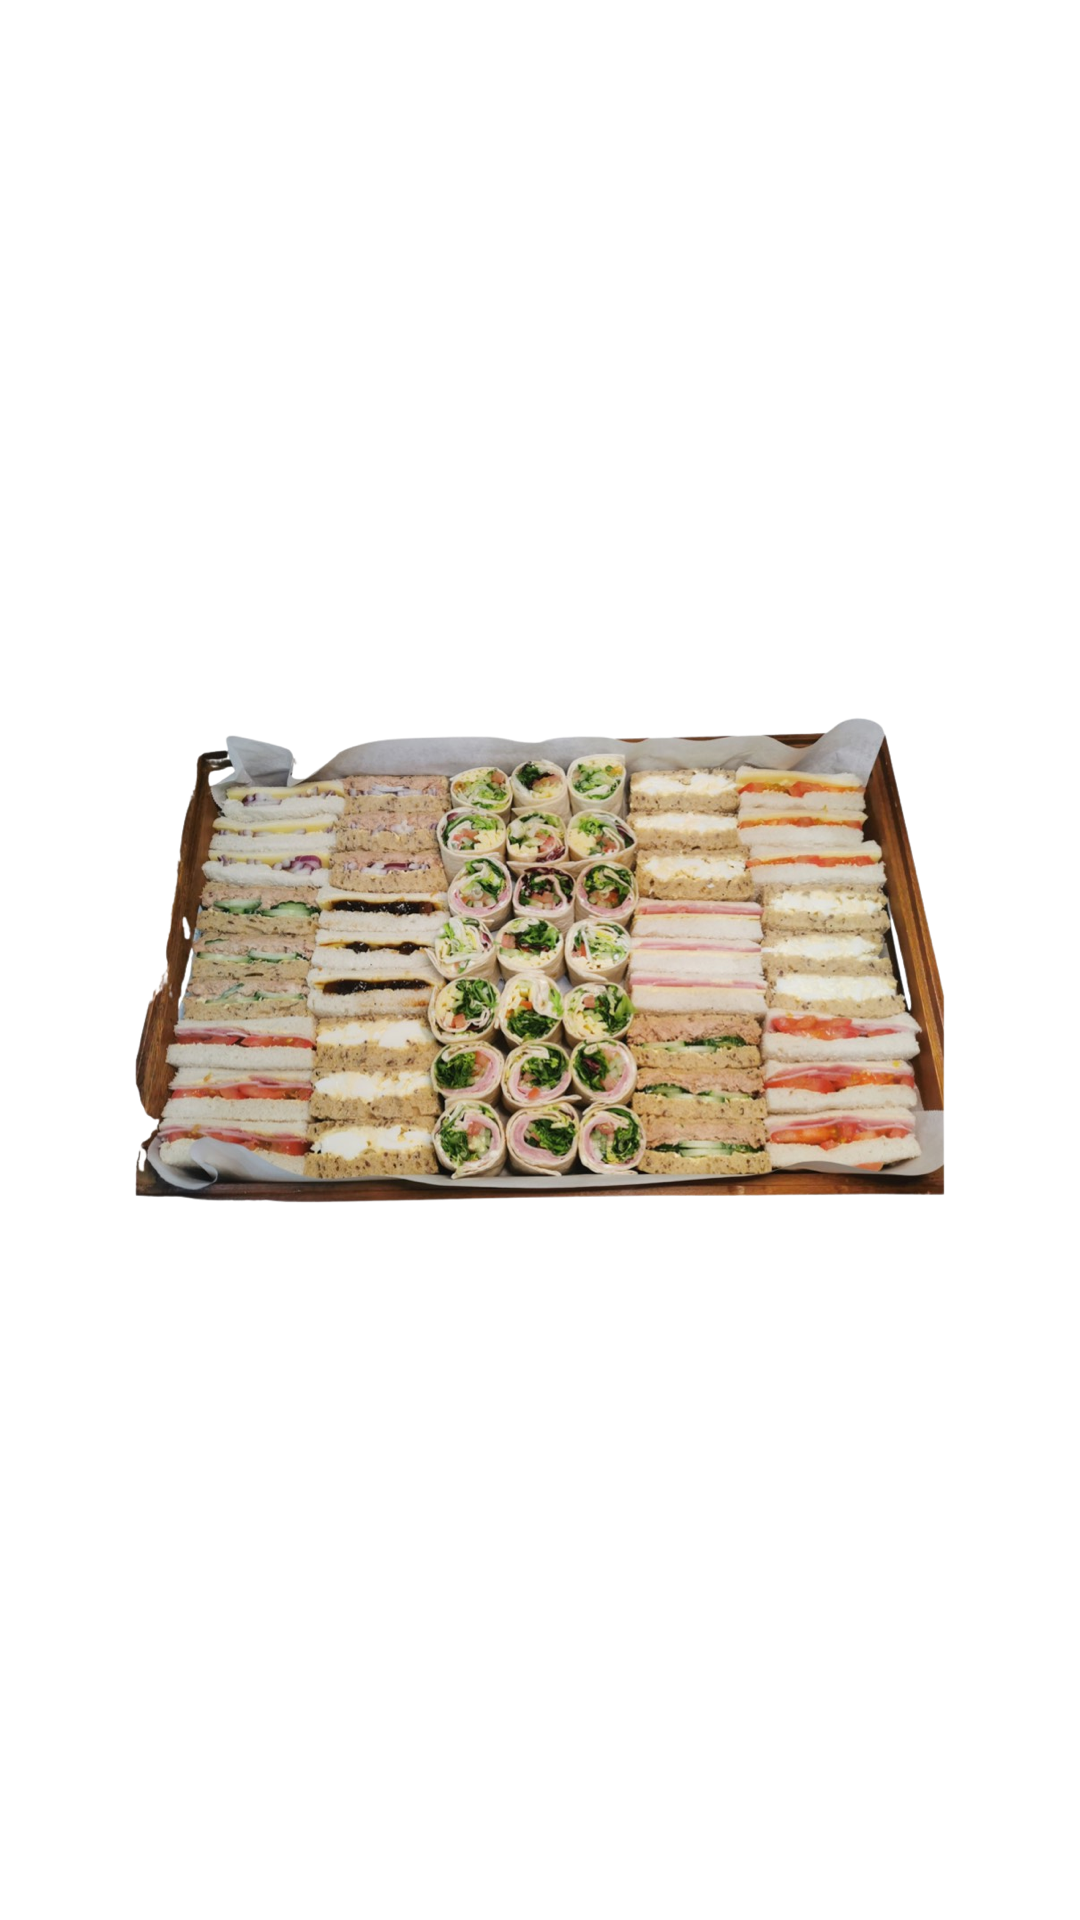 Buffet selection sandwiches